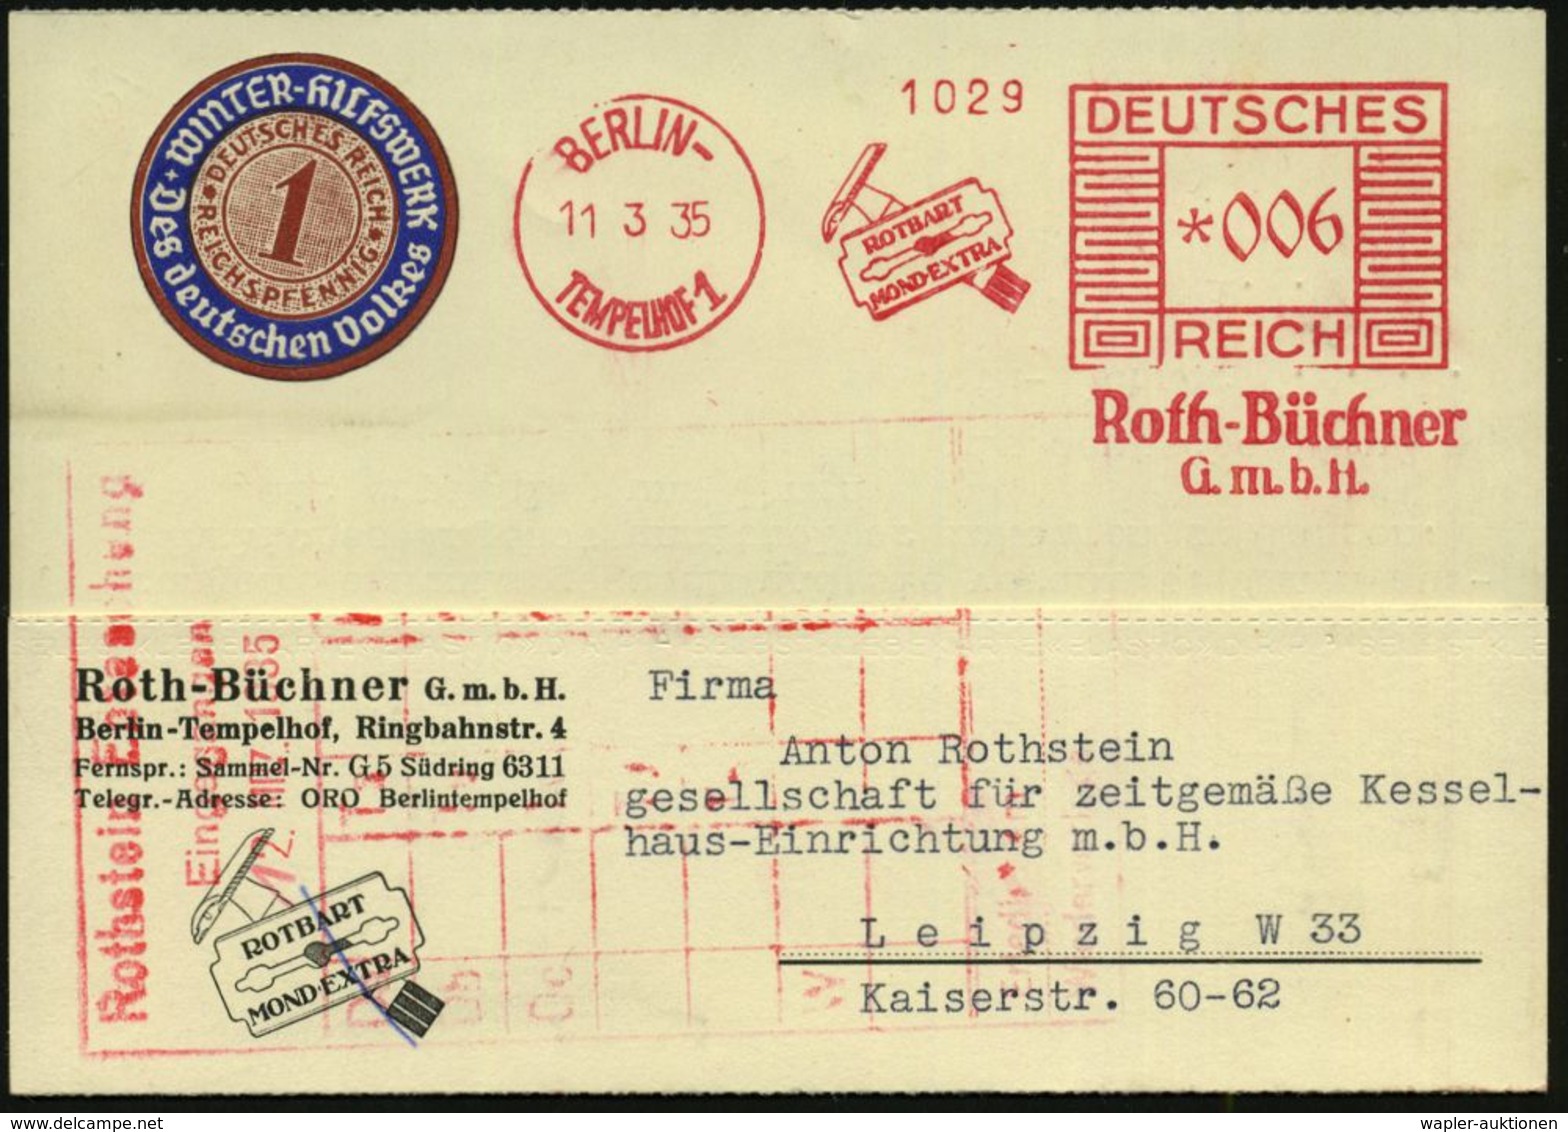 HAAR / BART / RASUR / FRISEUR : BERLIN-/ TEMPELHOF 1/ ROTBART/ MOND-EXTRA/ Roth-Büchner/ GmbH 1935 (11.3.) AFS = Naßrasi - Pharmacie